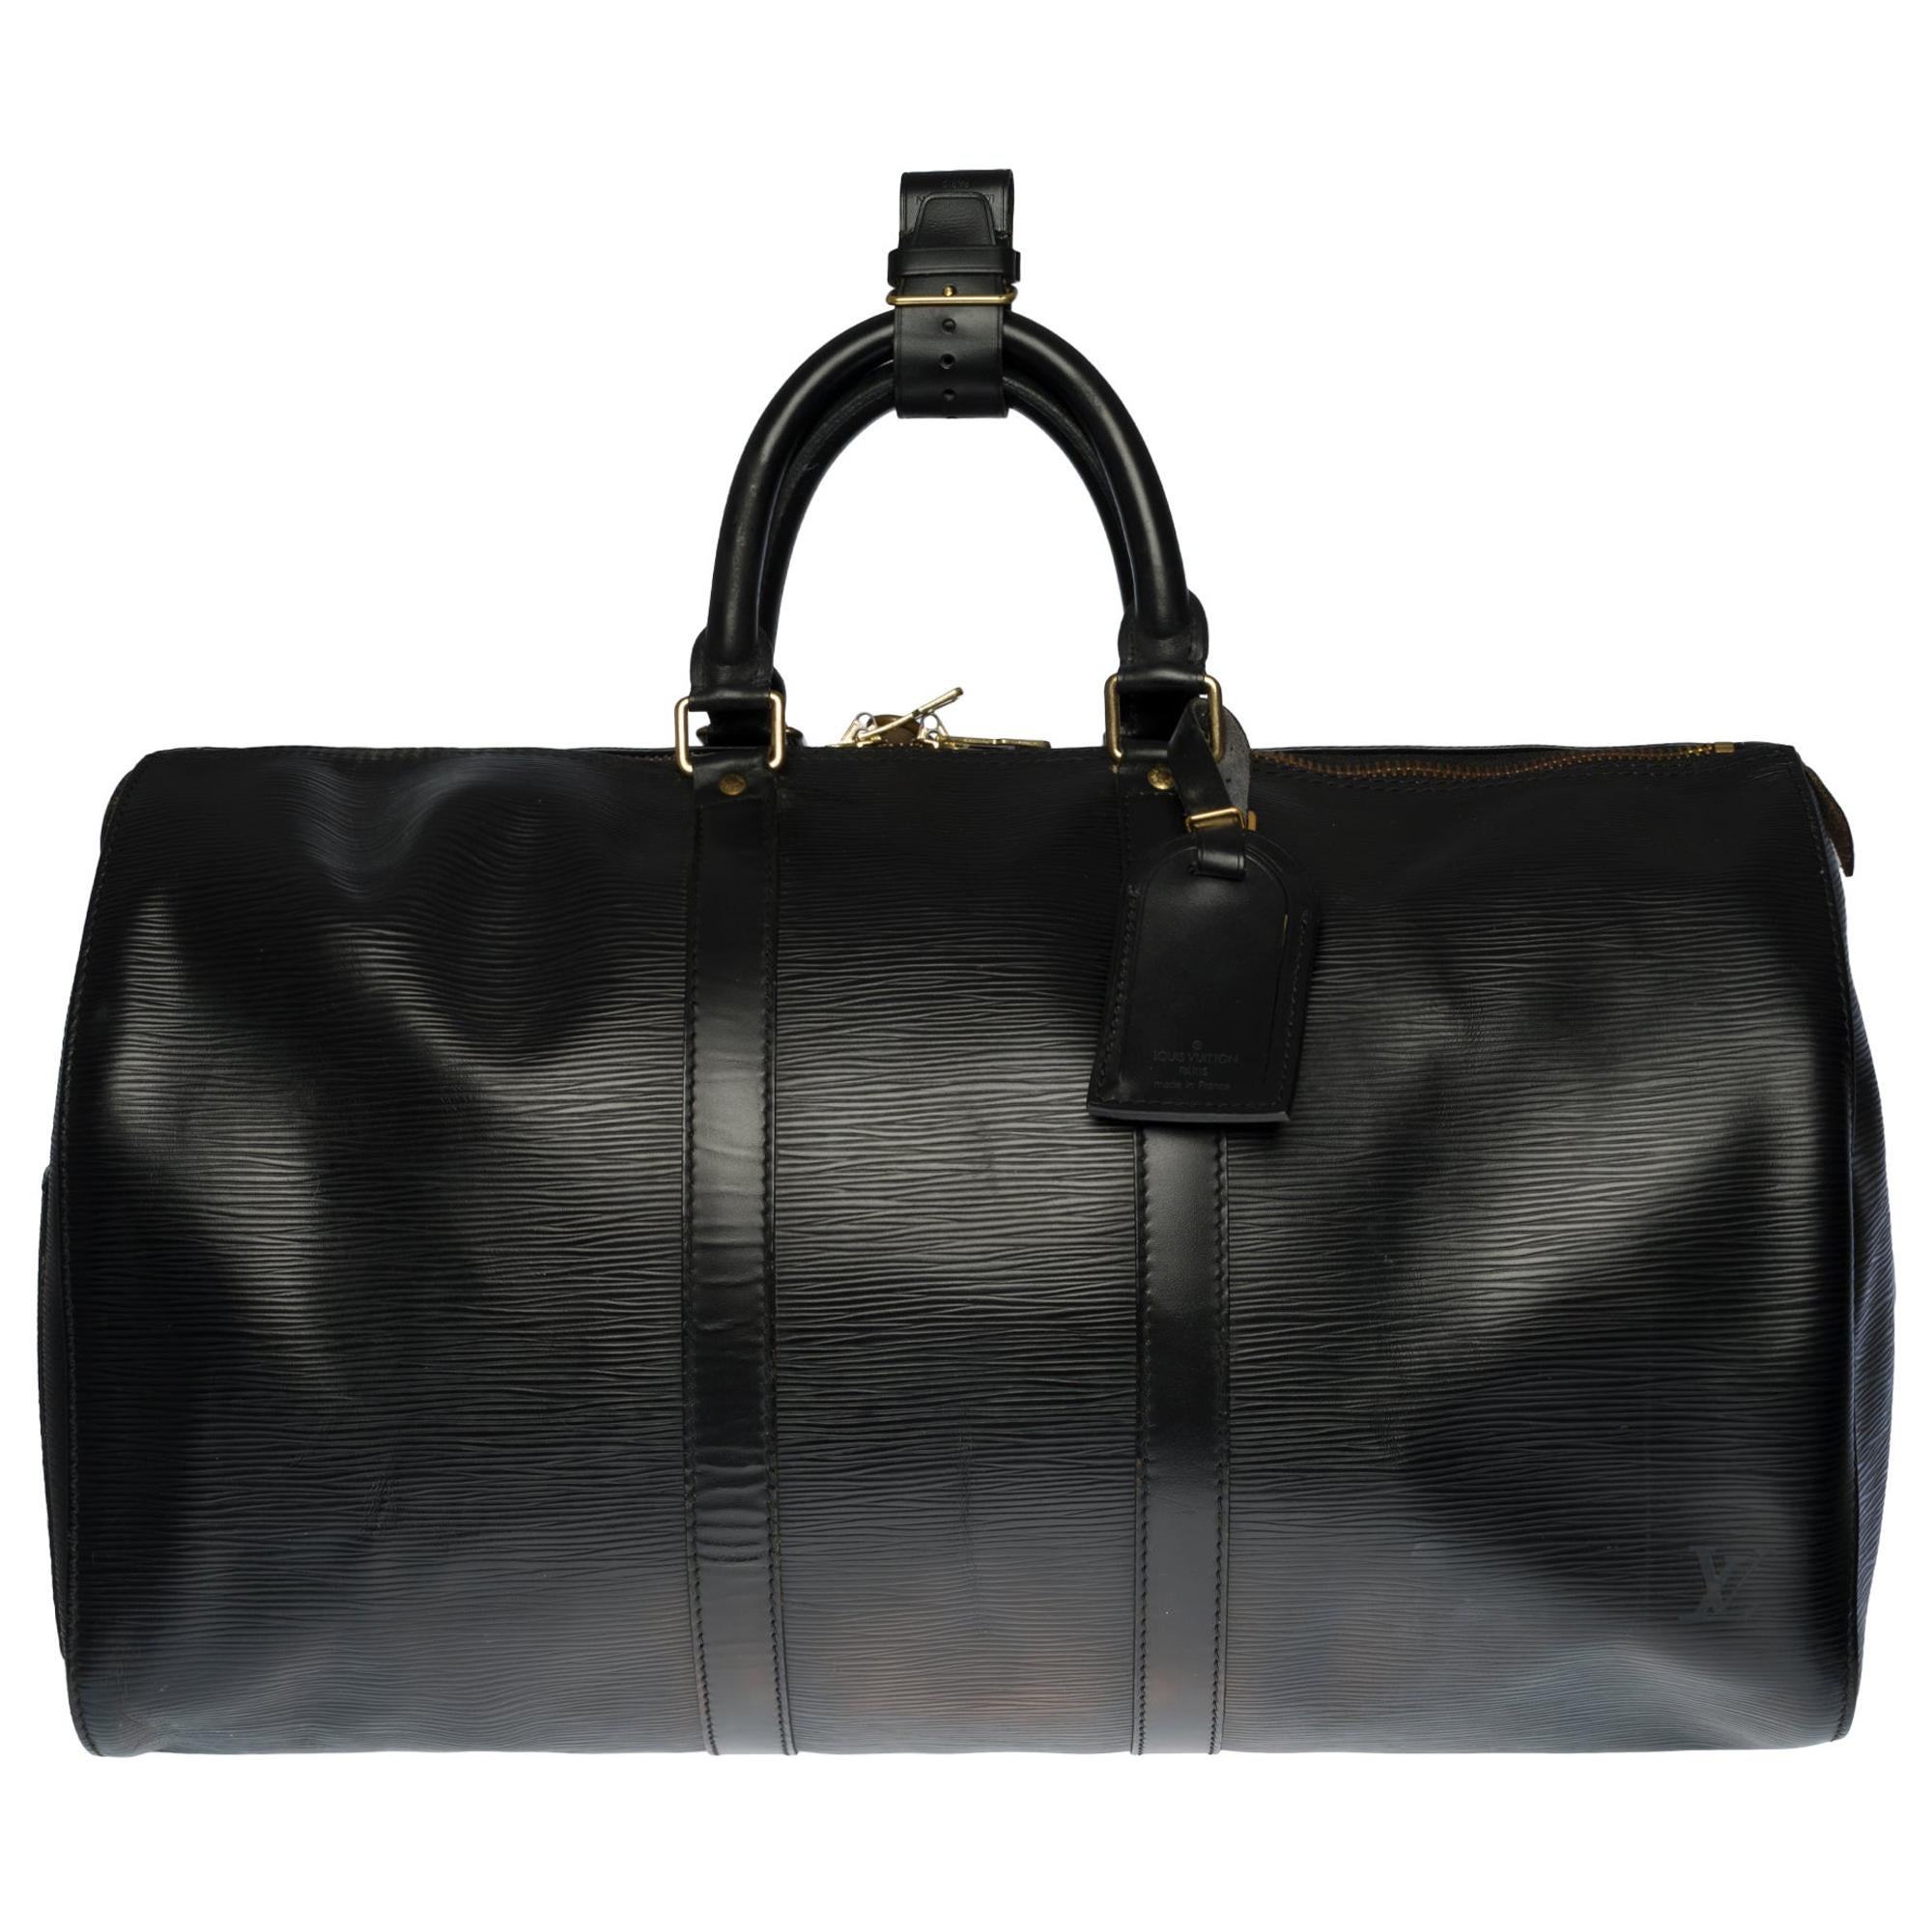 Louis Vuitton Keepall 45 Travel bag in black épi leather